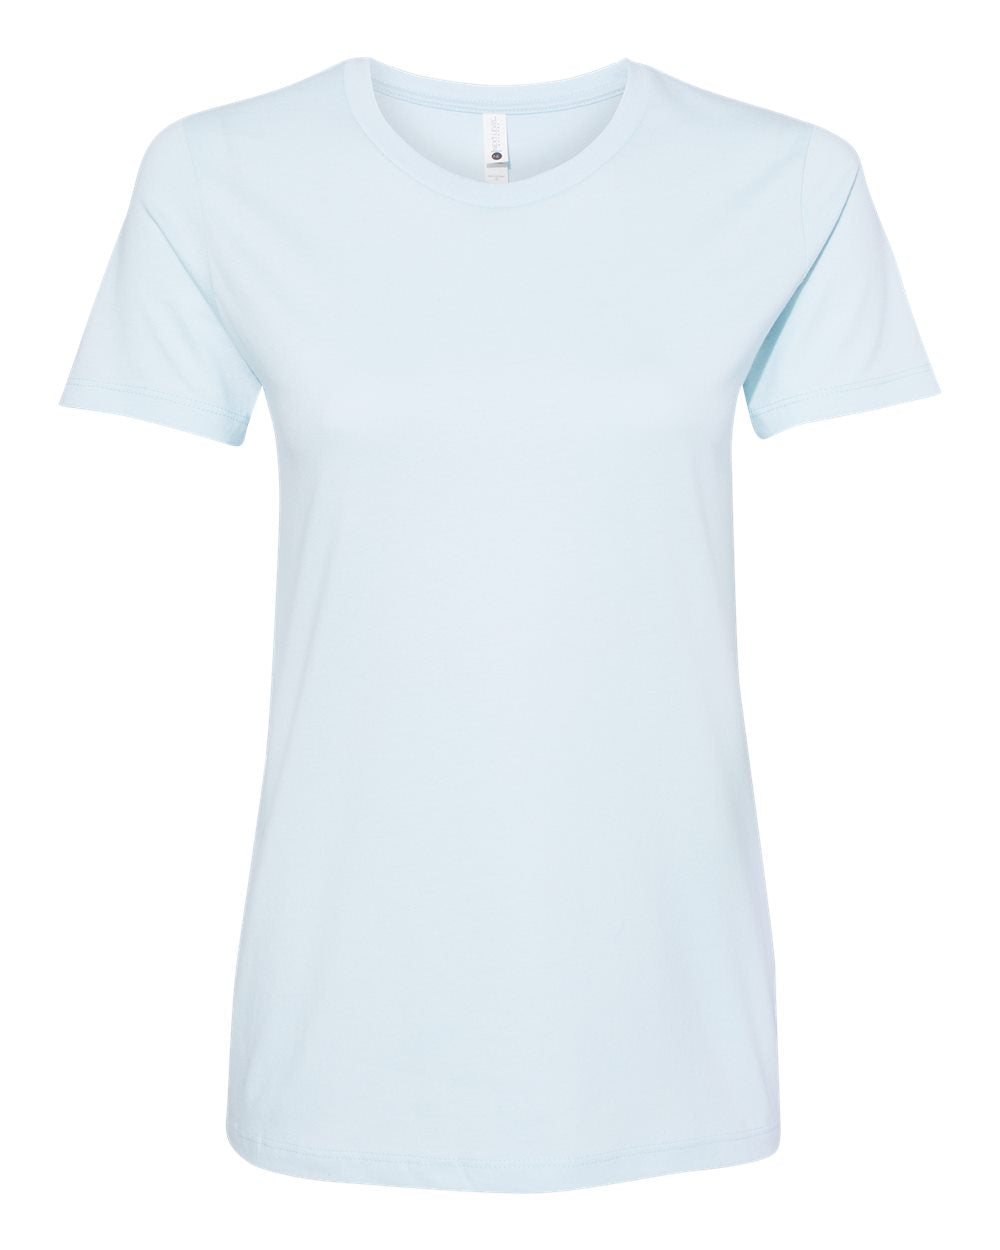 Next Level - Womens Cotton T-Shirt - 3900